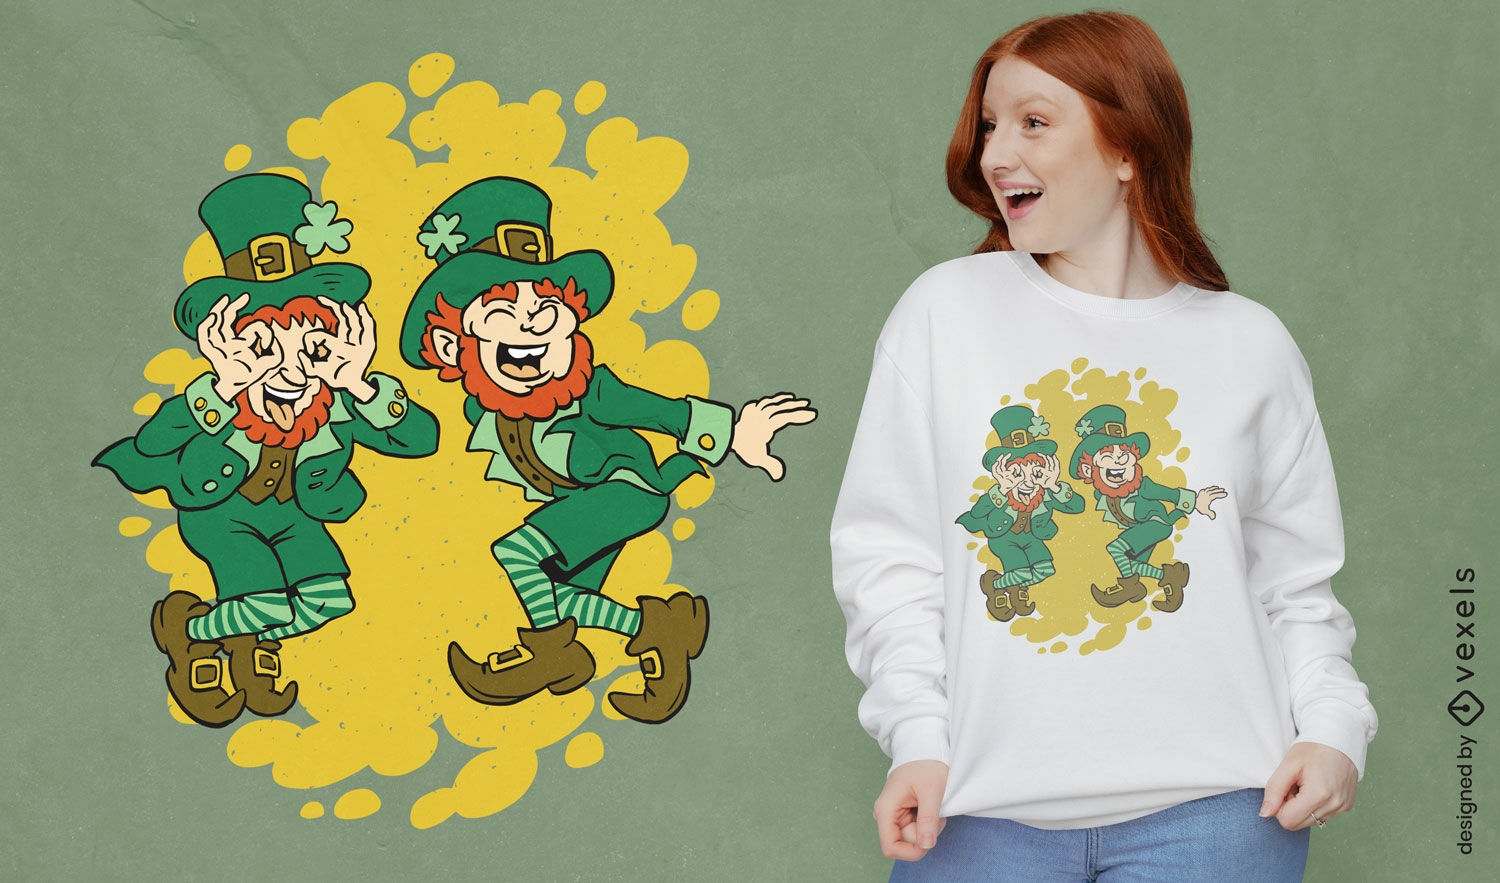 Leprechauns dancing happily t-shirt design